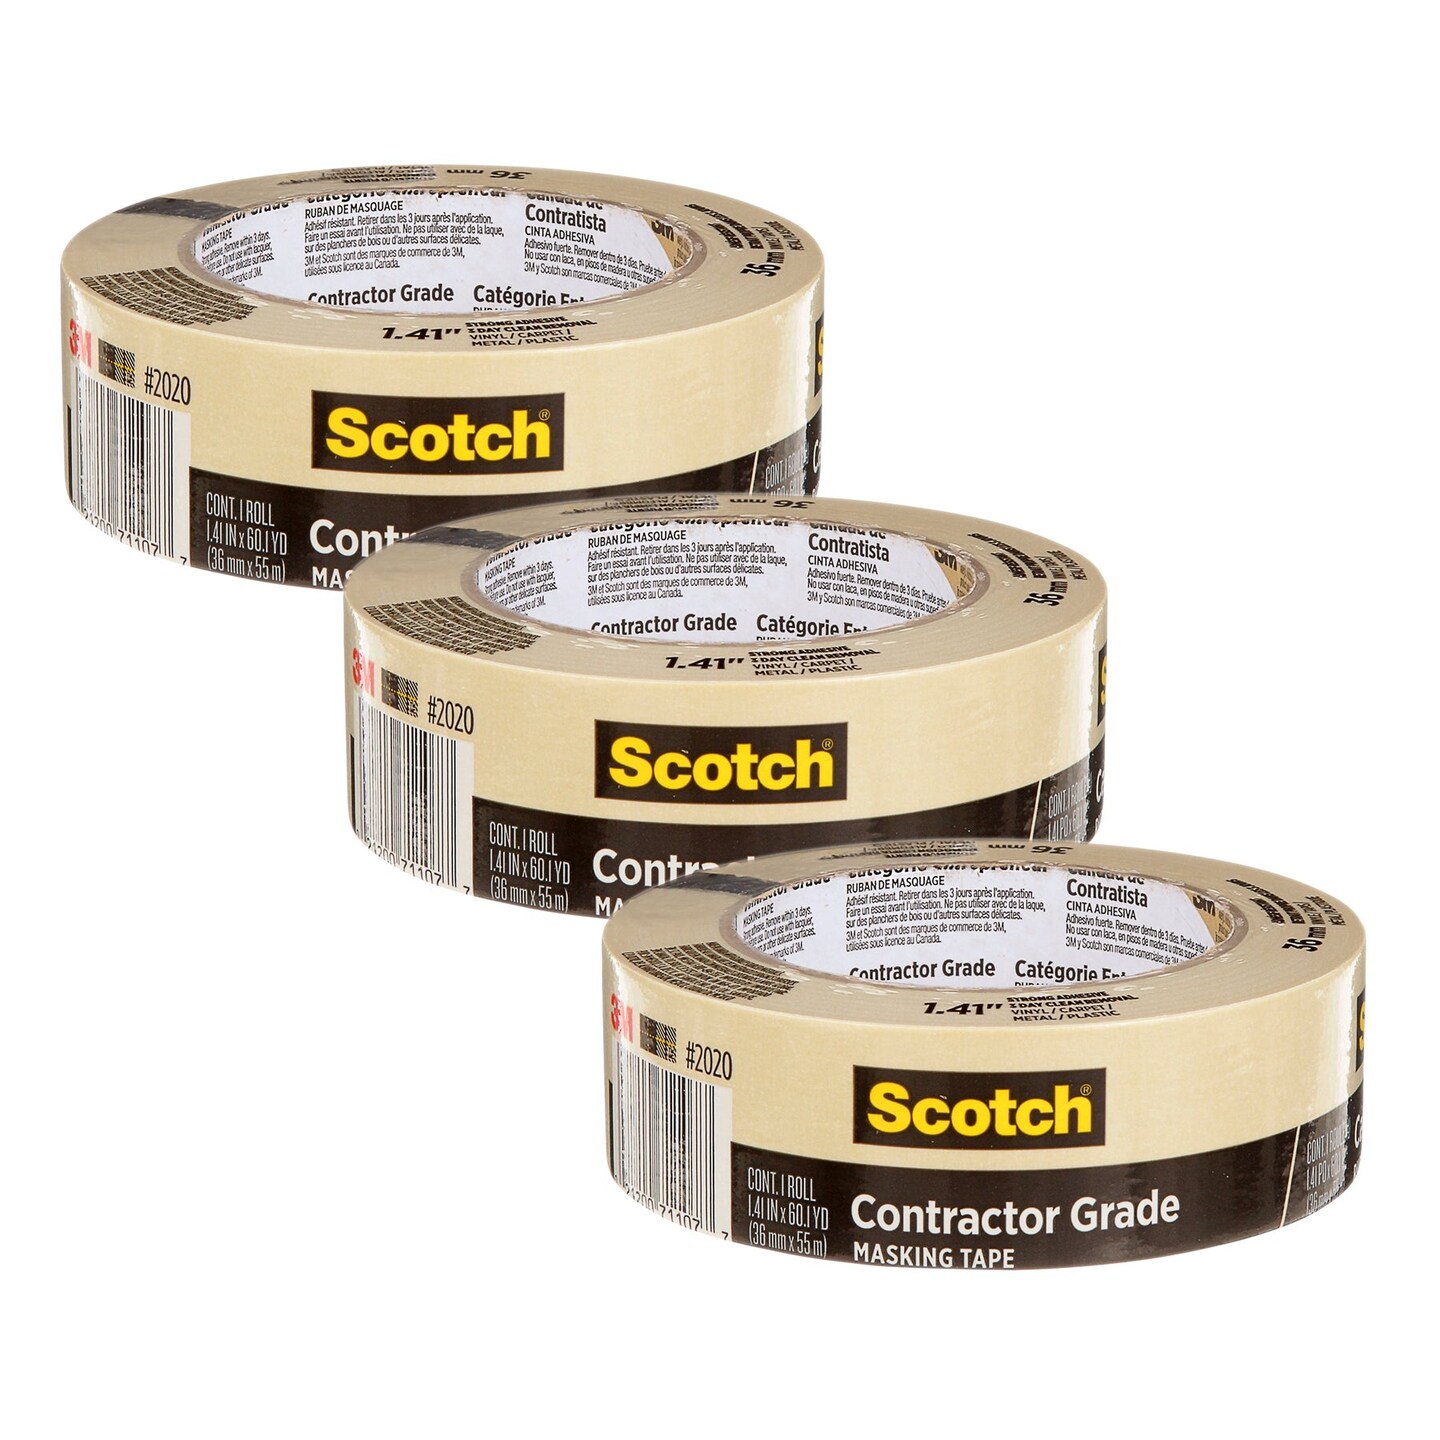 3M Scotch Masking Tape, 1.41 x 60.1 Yds